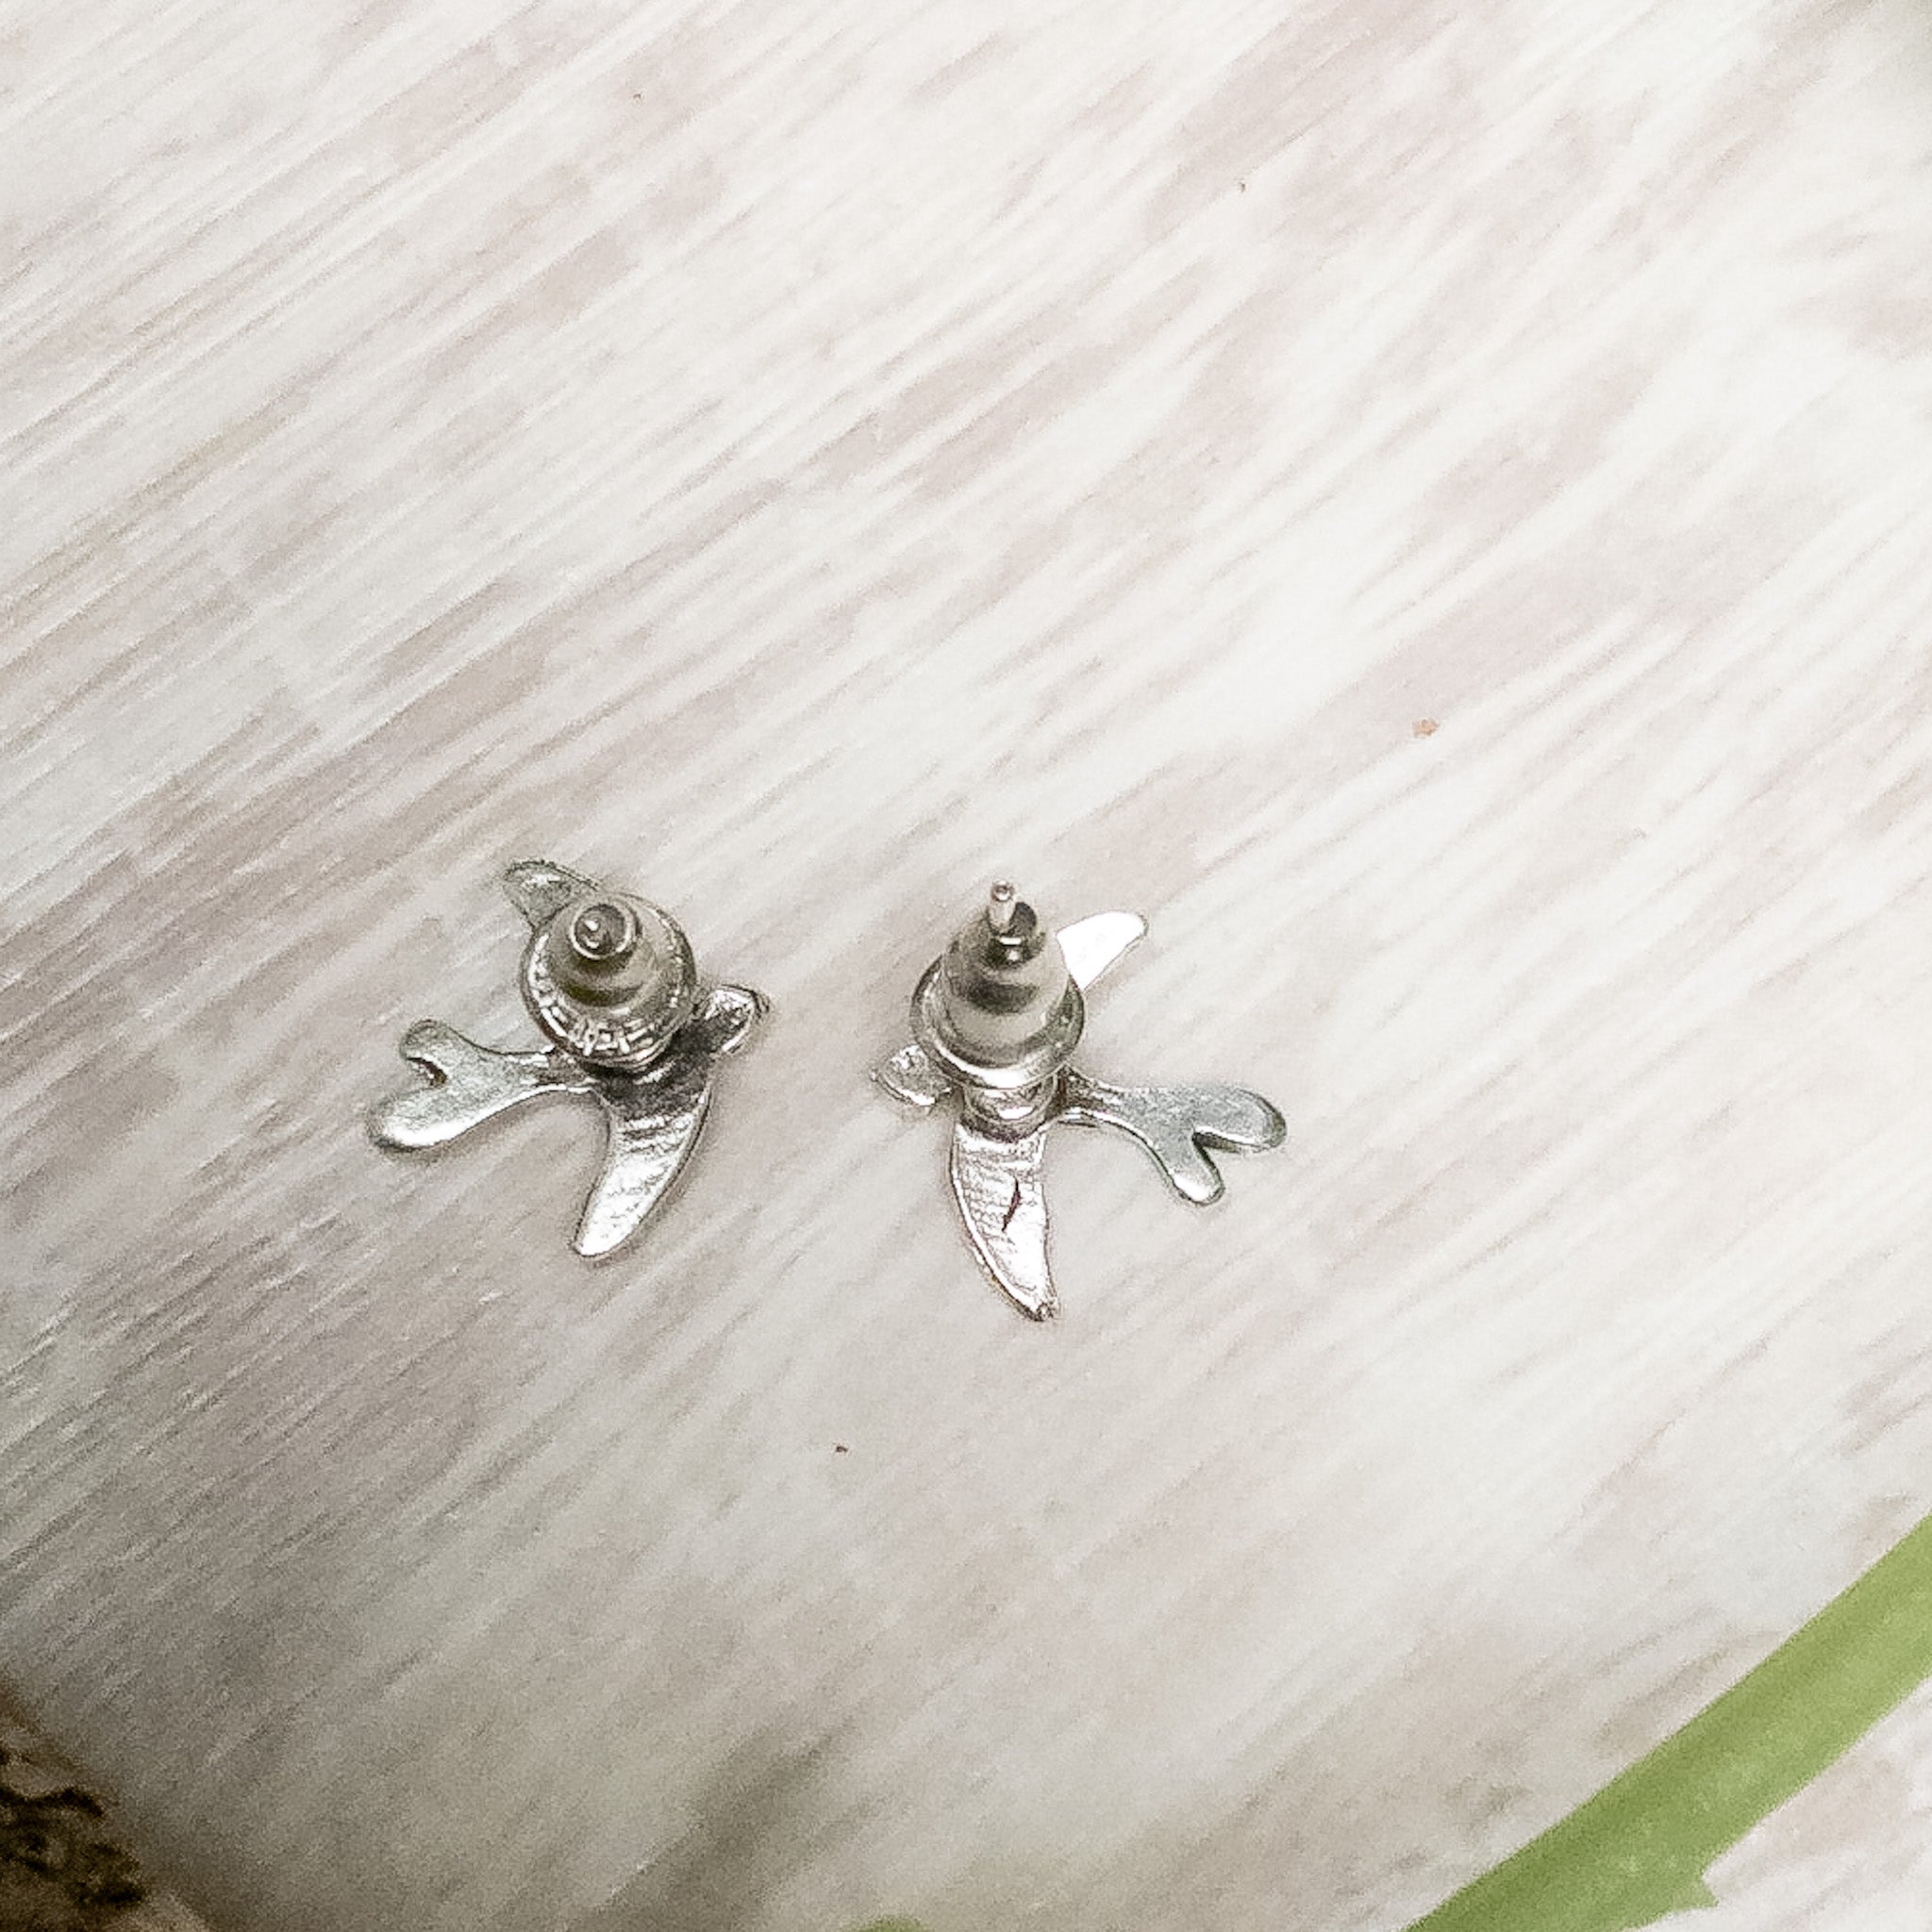 BNWT Minimalist Antique Silver Swallow Bird Fashion Stud Earrings